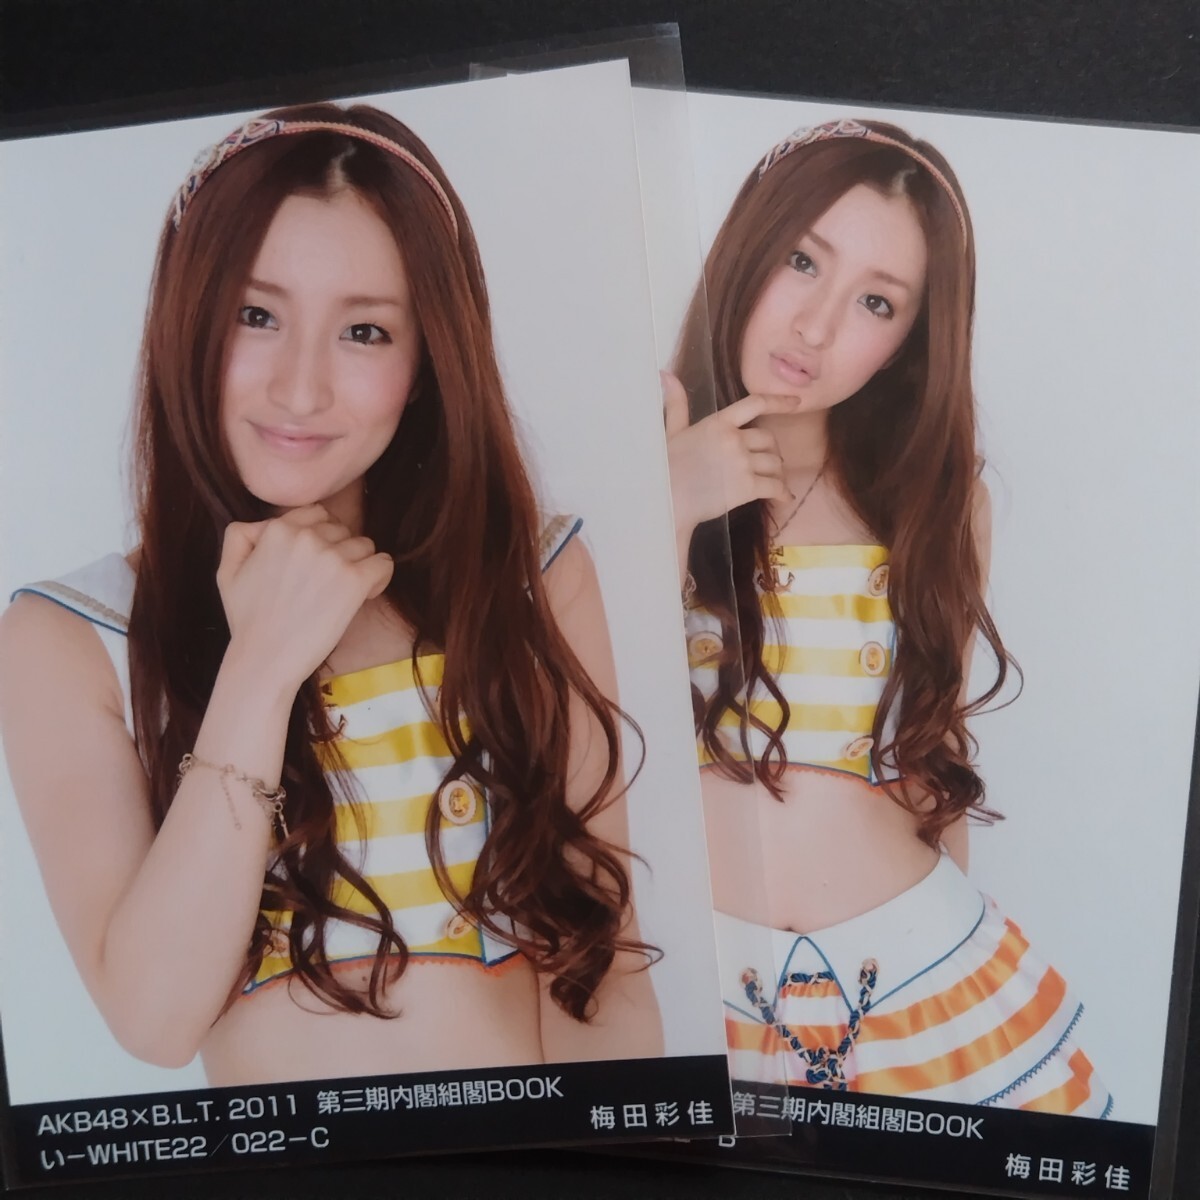 AKB48 生写真 AKB48×B.L.T. 2011 第三期内閣組閣BOOK WHITE BC 2種セット 梅田彩佳_画像1